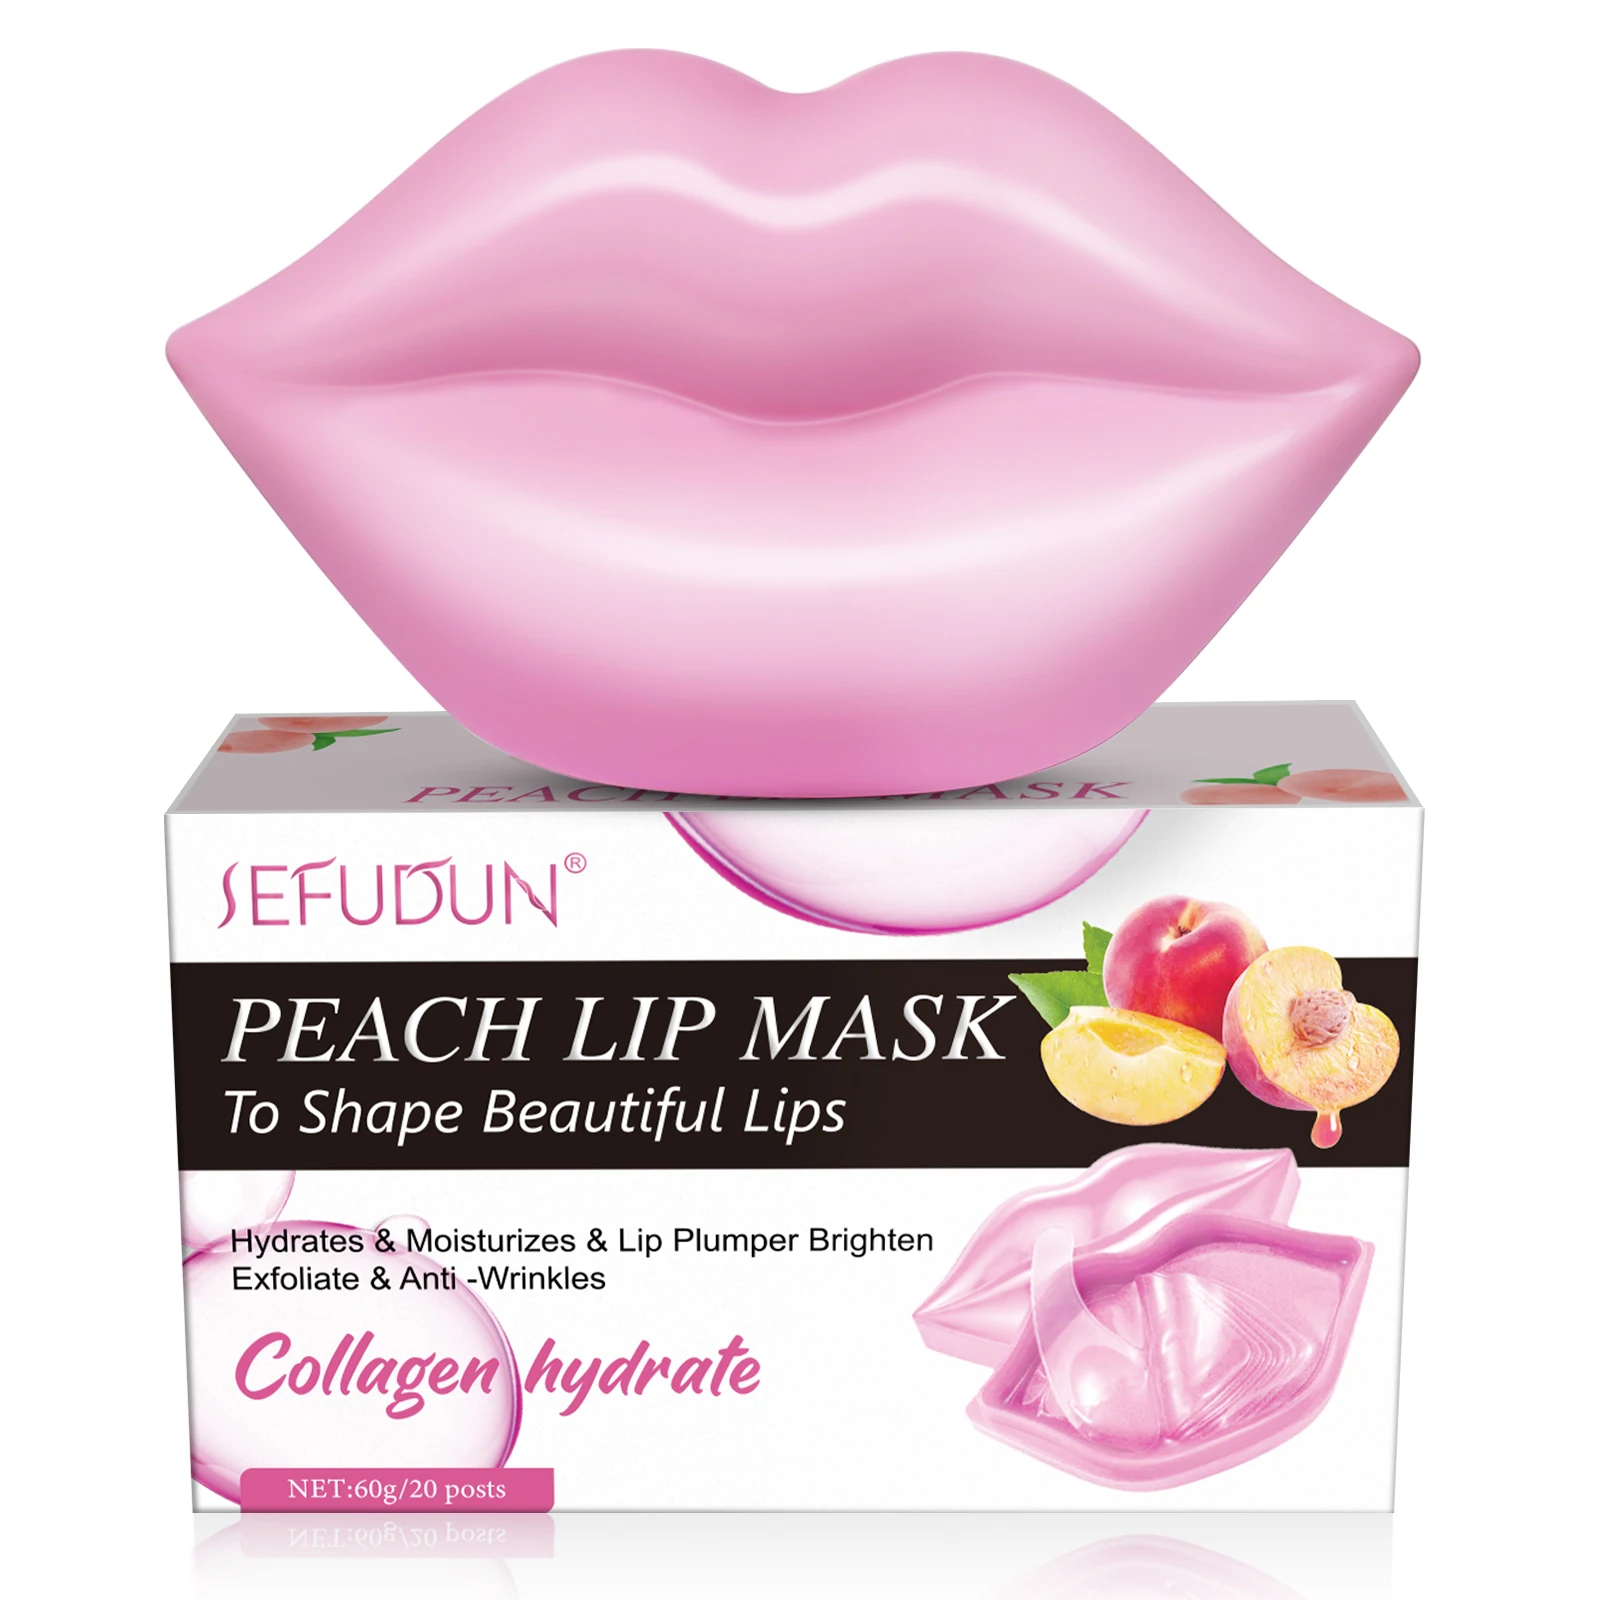 

SEFUFUN Private Label Nourishing Plumper Hydrating Jelly Lip Mask Sheet